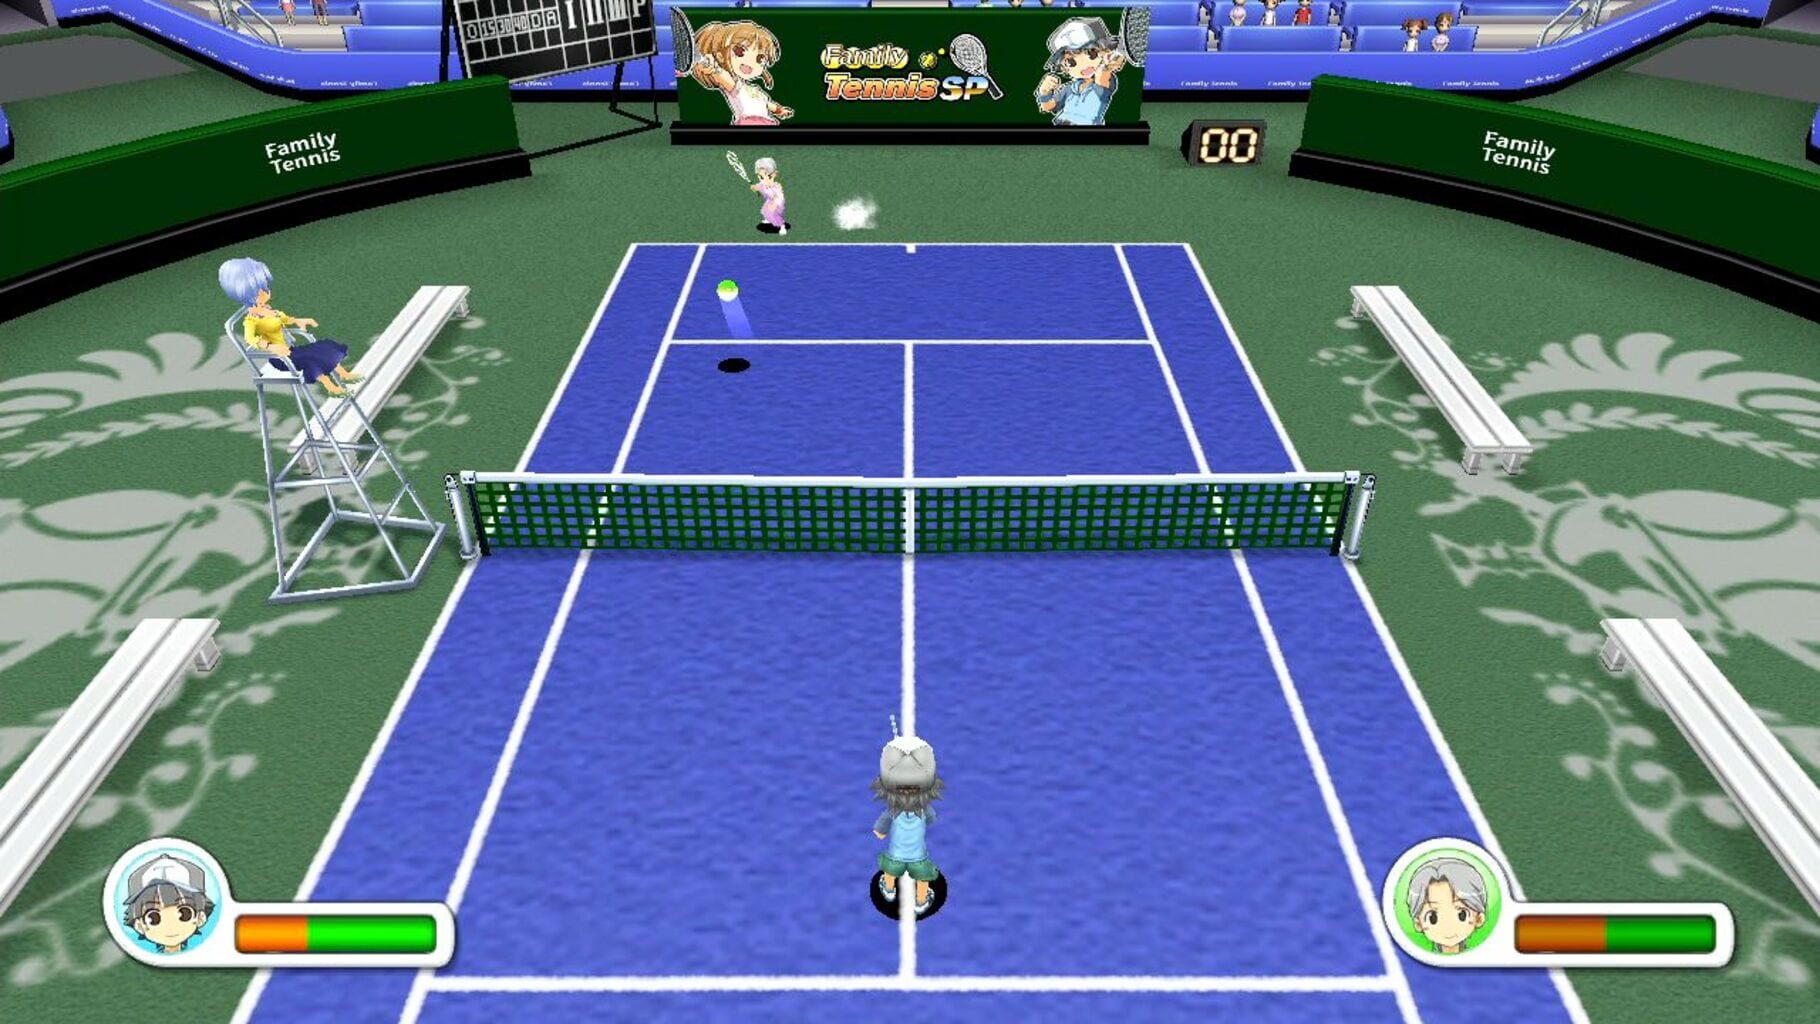 Family Tennis SP screenshot